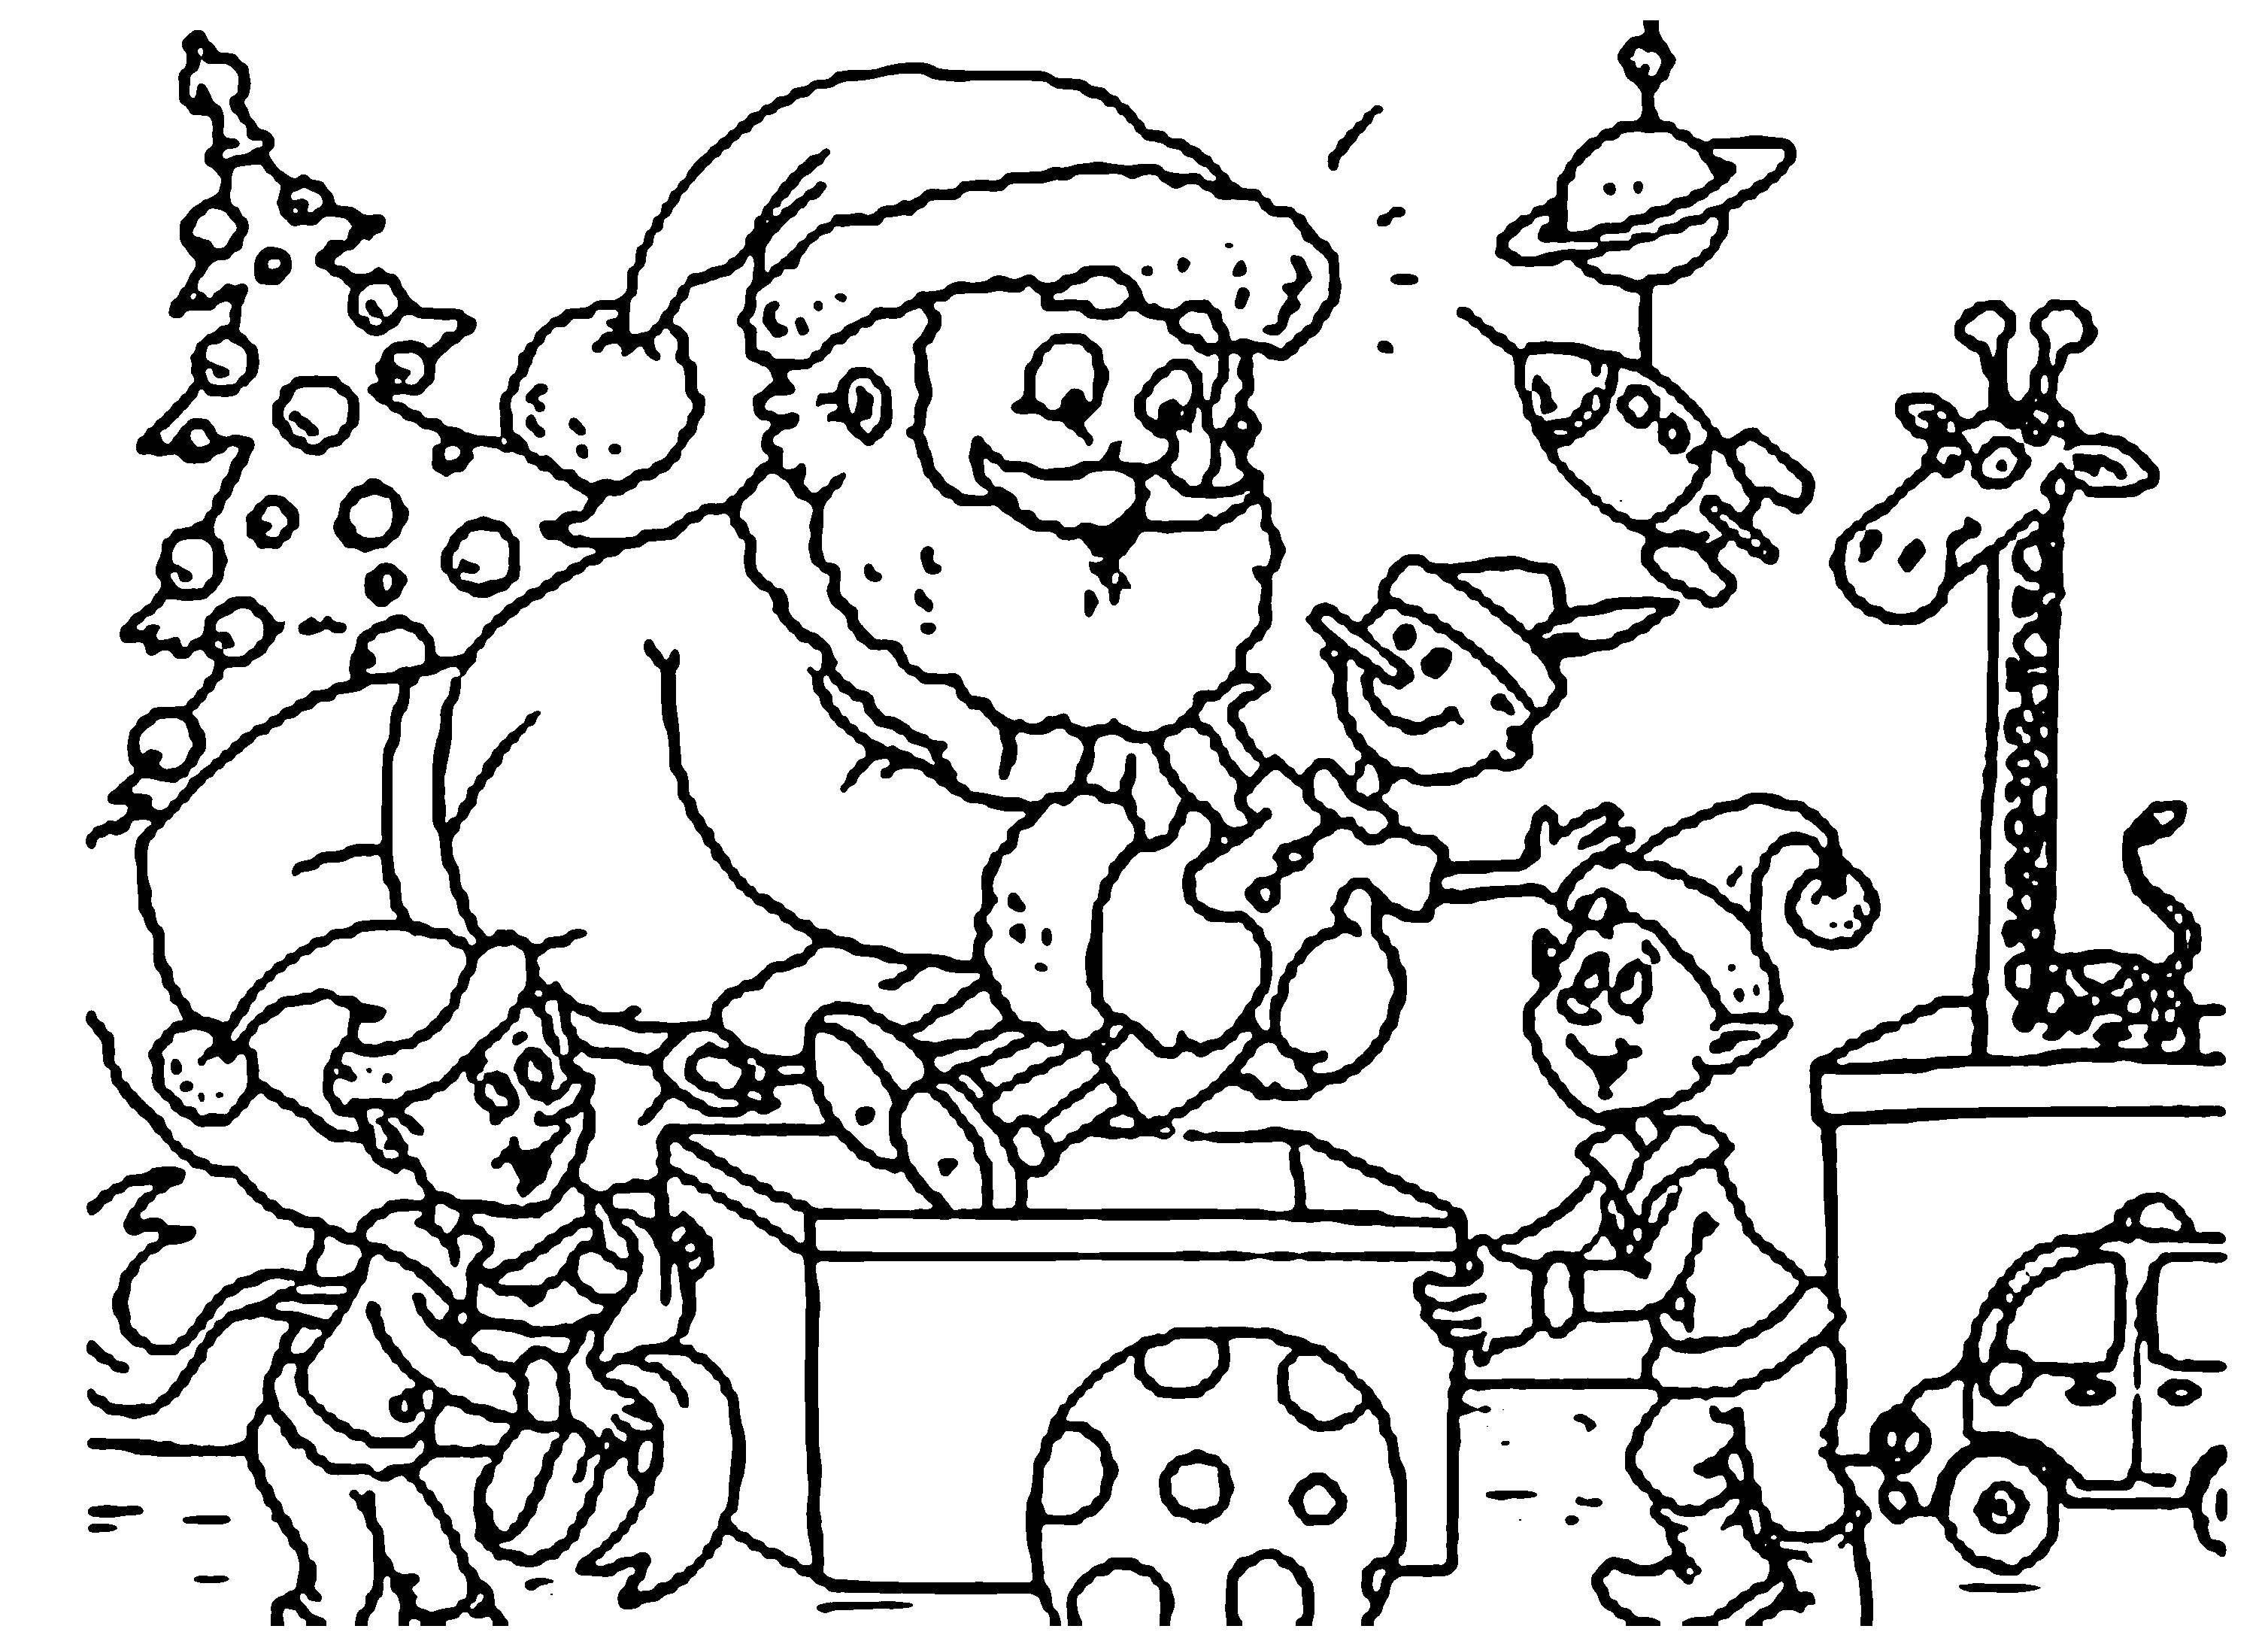 Название: Раскраска Санта сортирует подарочки. Категория: рождество. Теги: Рождество, Санта Клаус, подарки.